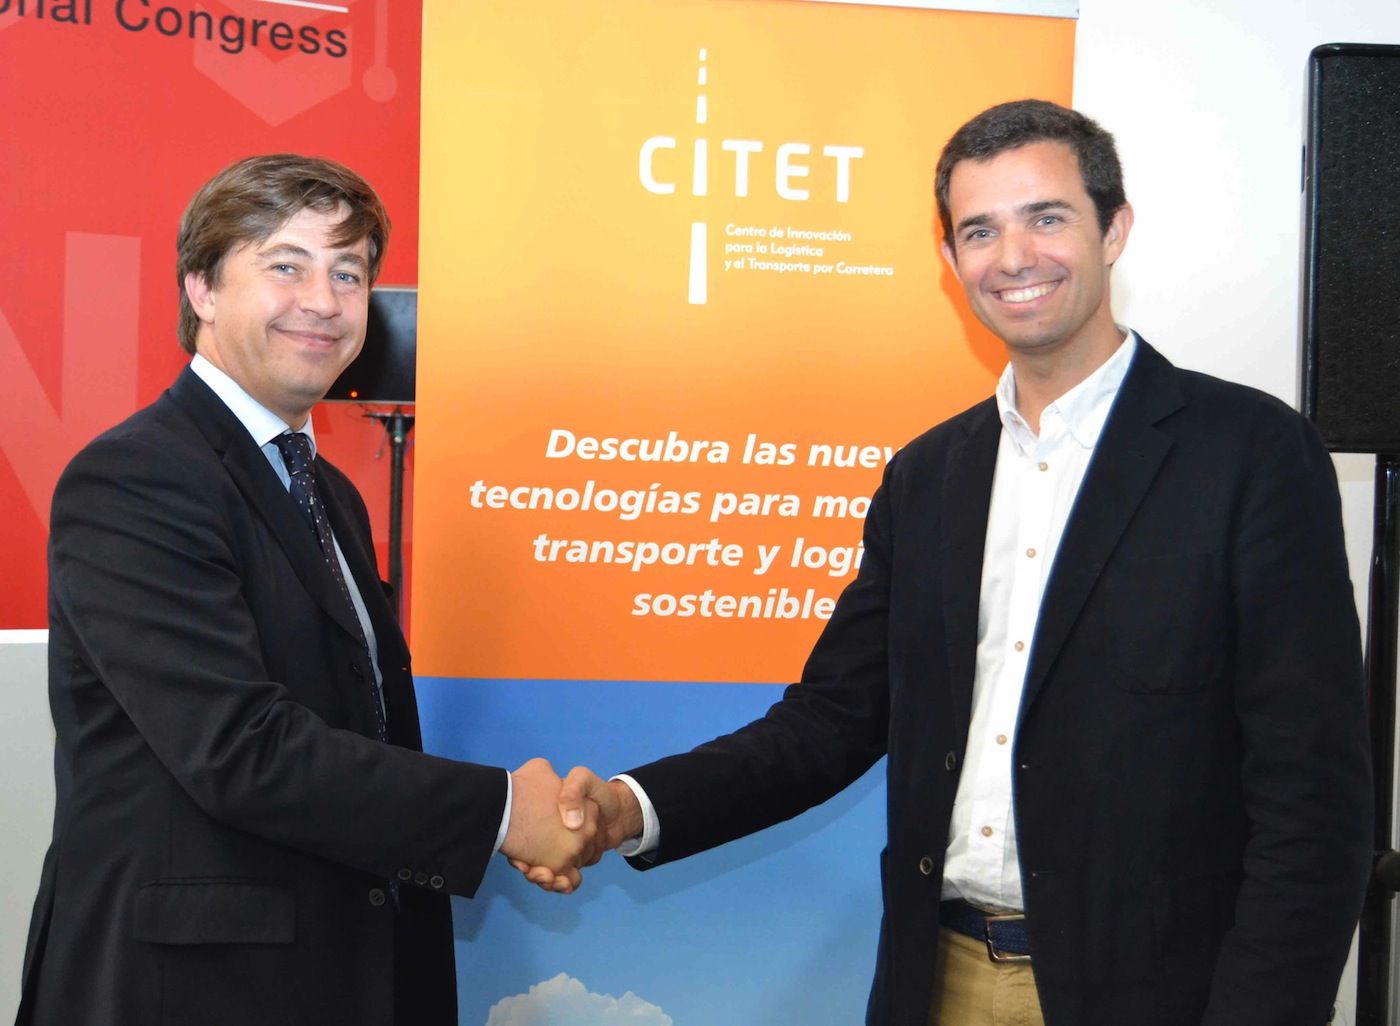 Acuerdo entre Citet y SoftDoit